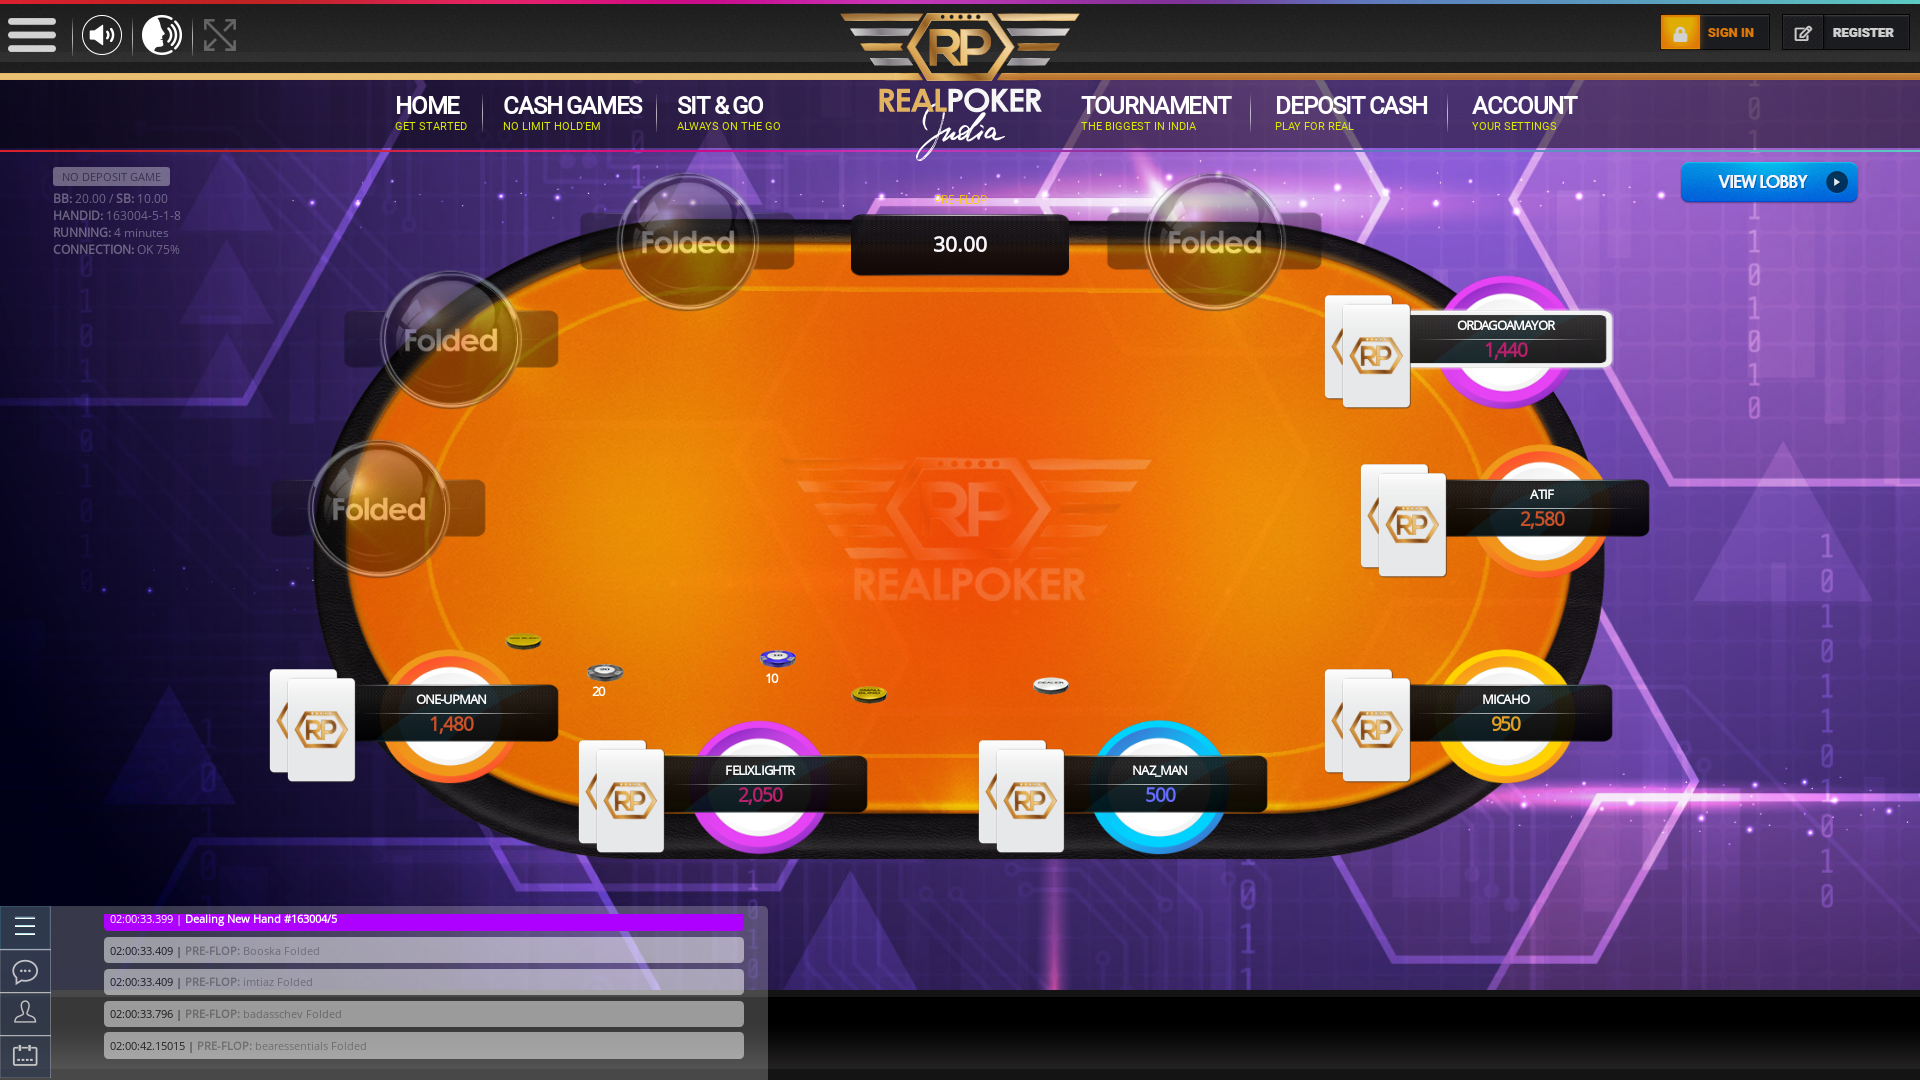 ordagoamayor playing online poker on the Bikaner table